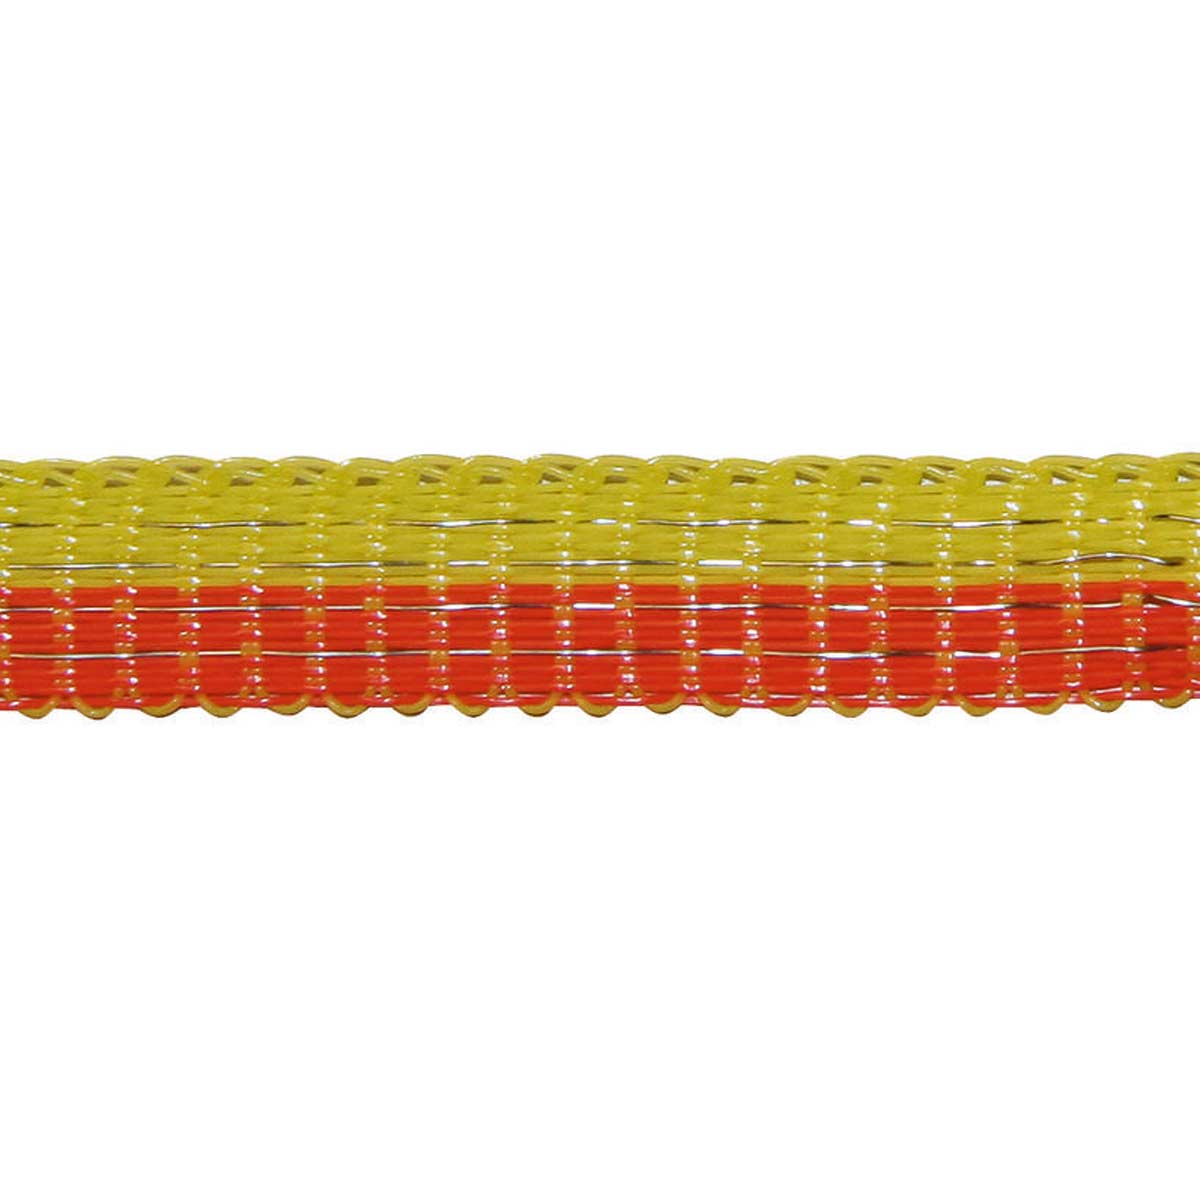 Agrarzone Pasture Fence Tape Basic 10mm, 4x0.16 Niro, yellow-orange 250 m x 10 mm